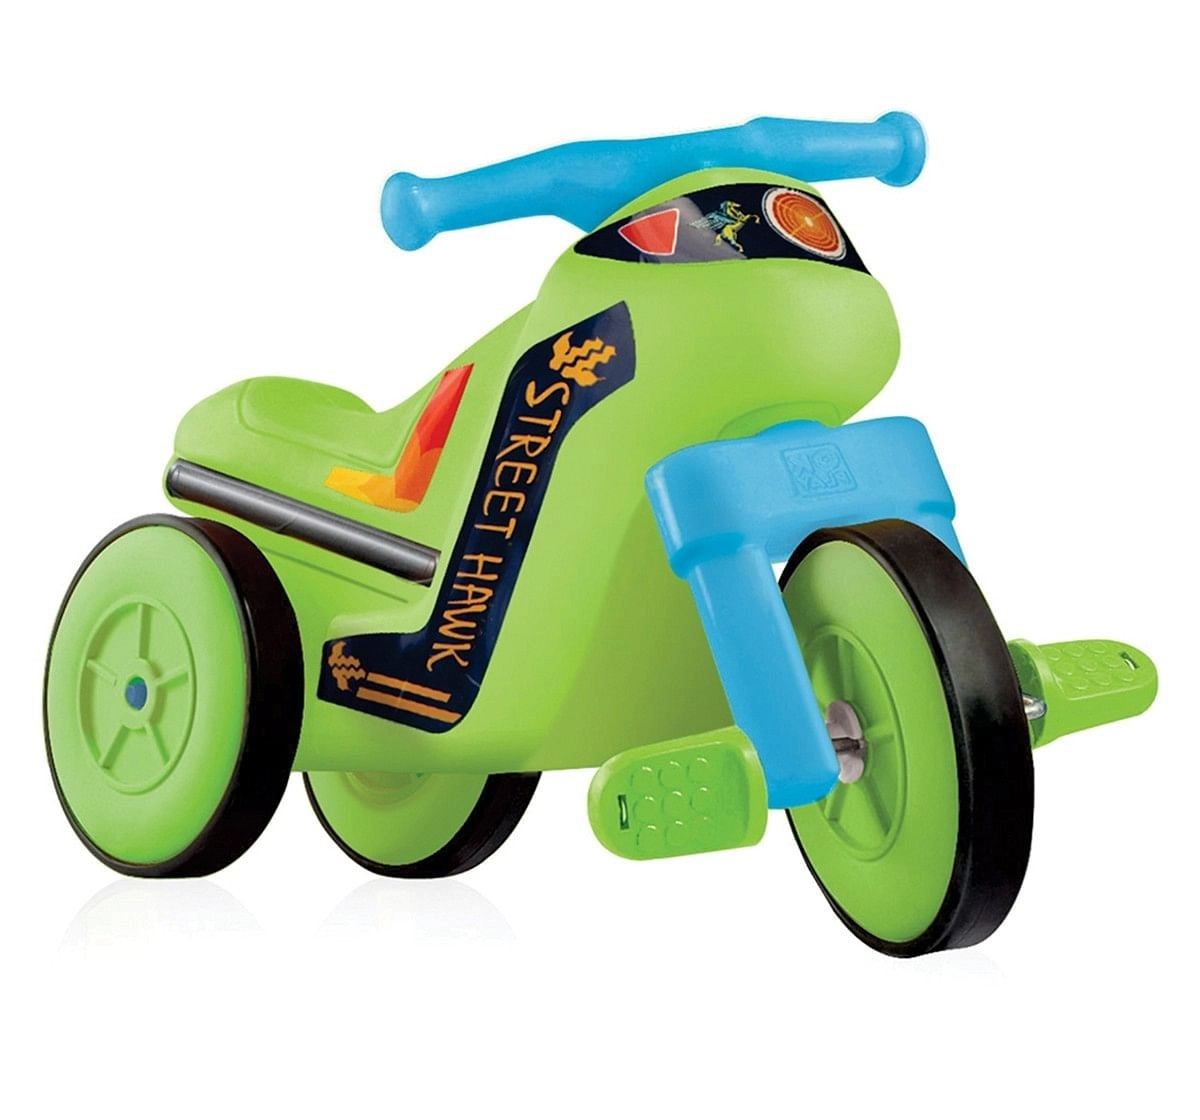 Ok Play Street Hawk Bike for Kids Perfect Ride on Toy Green 3Y+